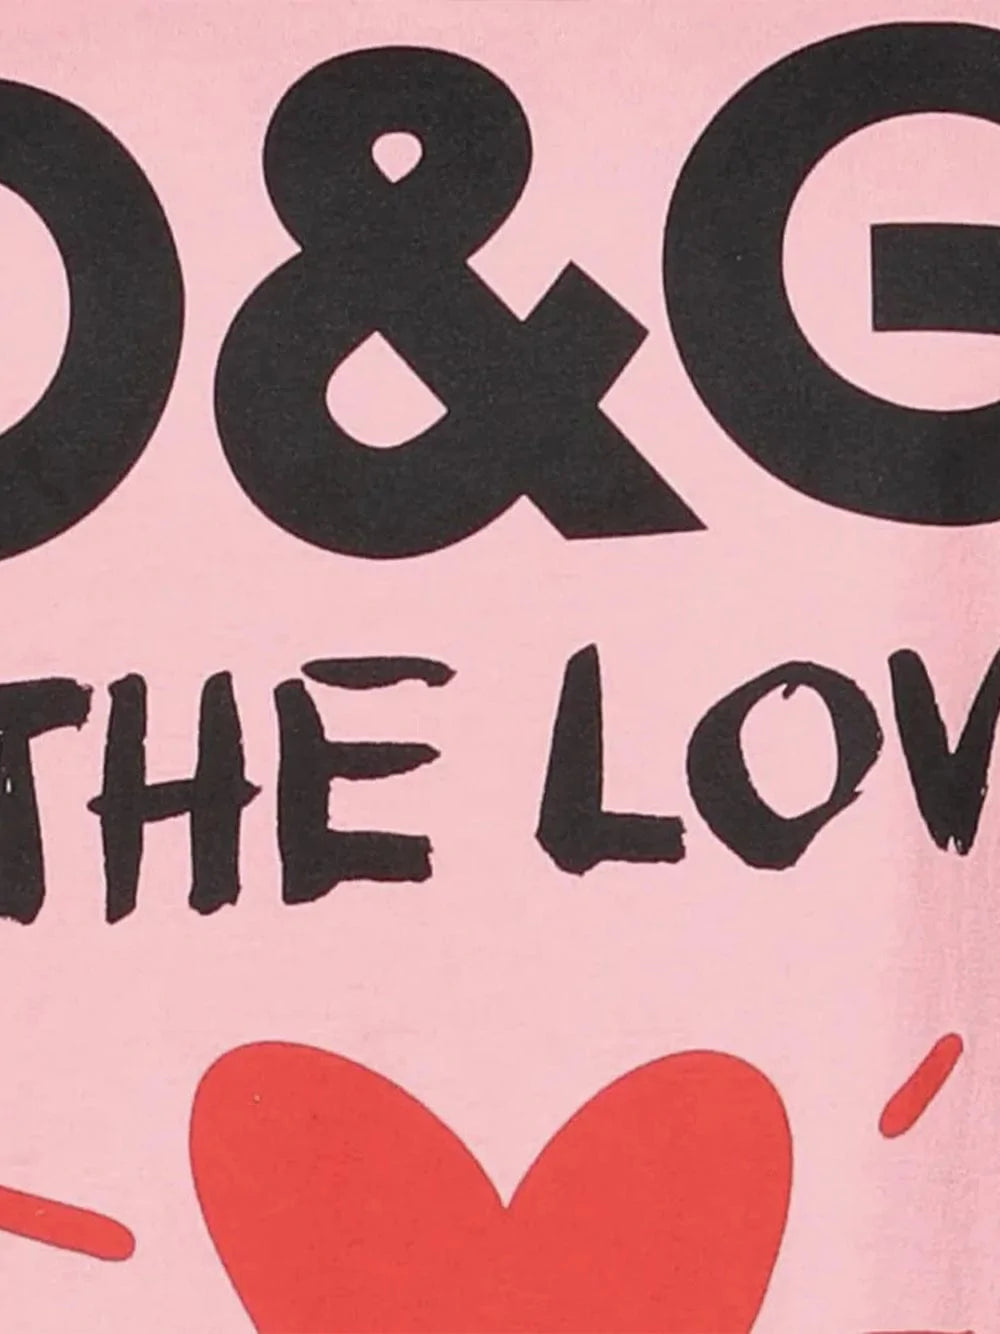 Dolce & Gabbana D&G All The Lovers Print Tank Top